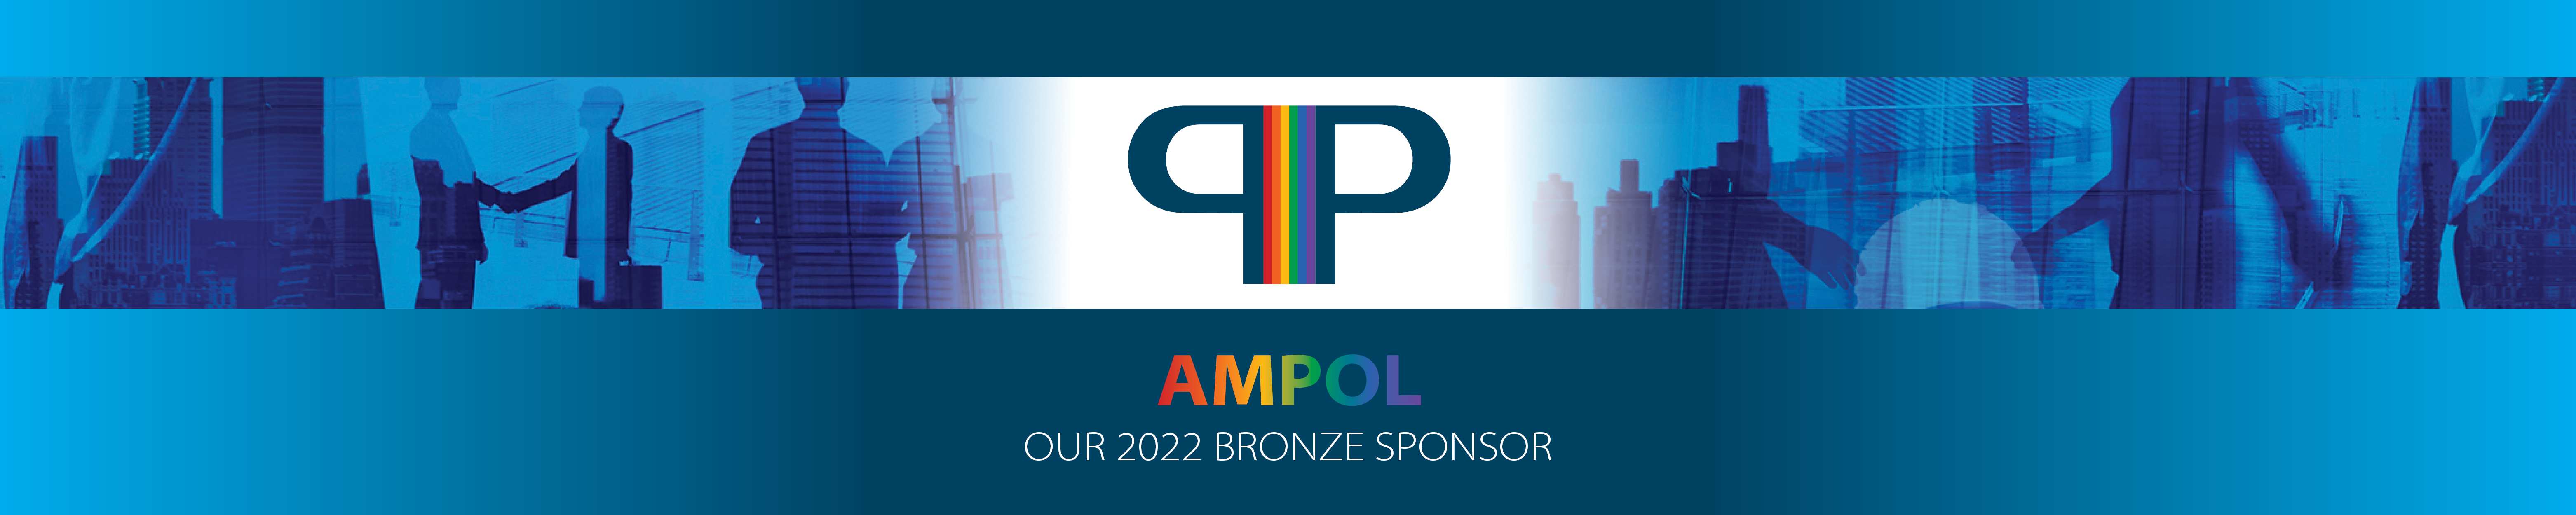 PIP_Conference_Sponsor_Ampol